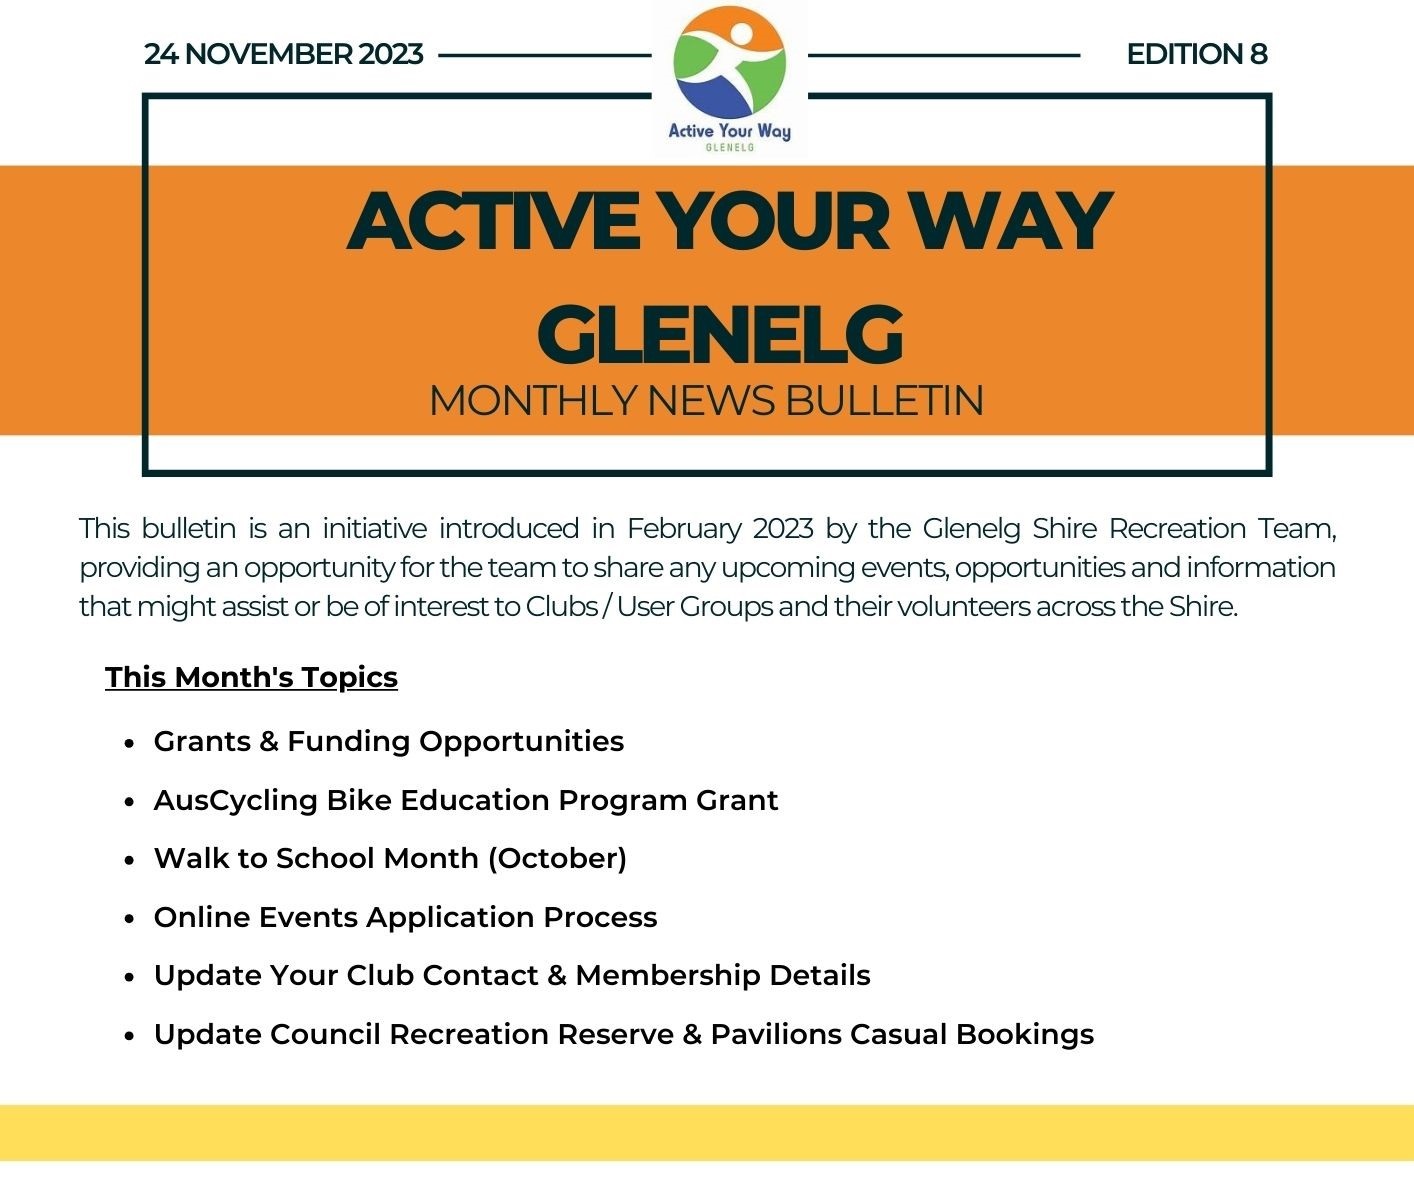 Active-Your-Way-Glenelg-Monthly-News-Bulletin-Oct-Nov-Topics.jpg